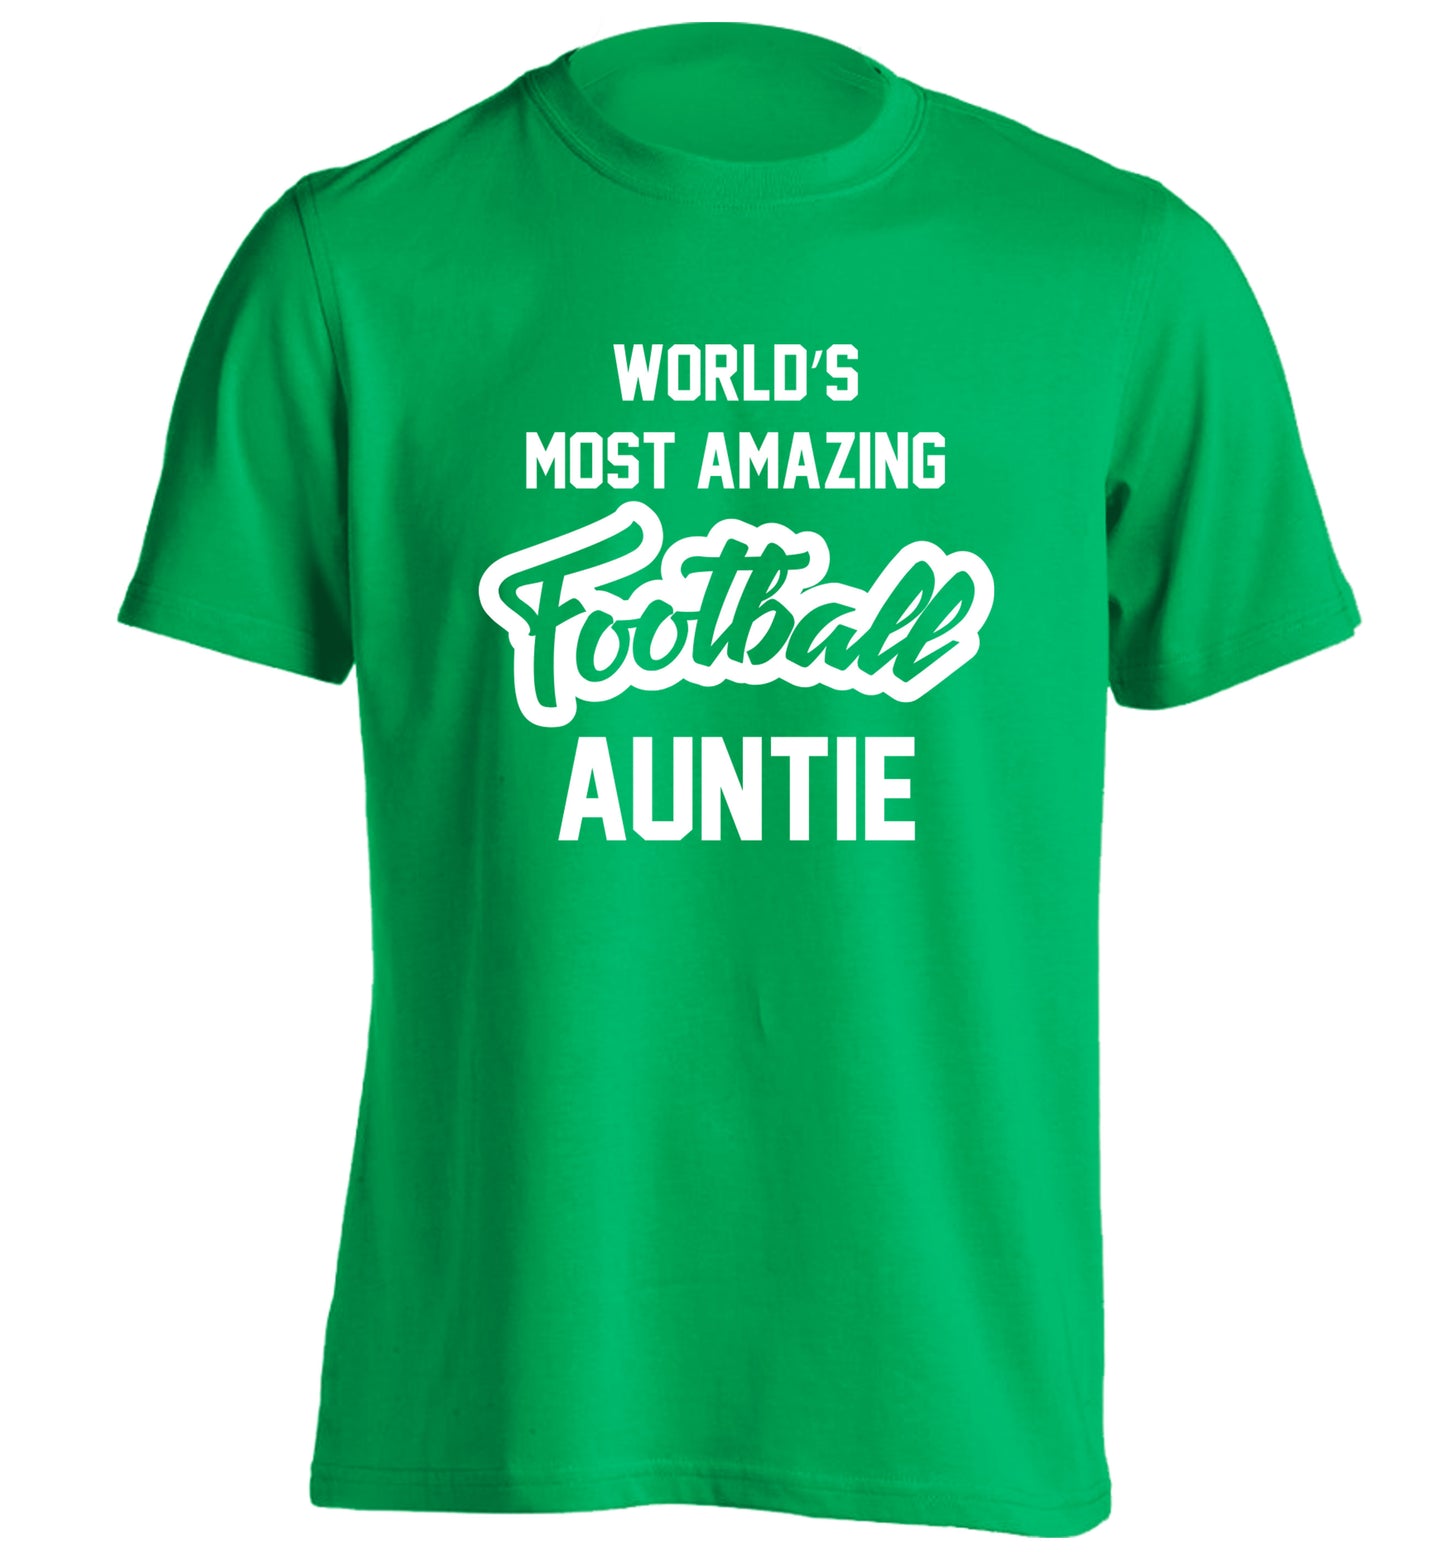 Worlds most amazing football auntie adults unisexgreen Tshirt 2XL